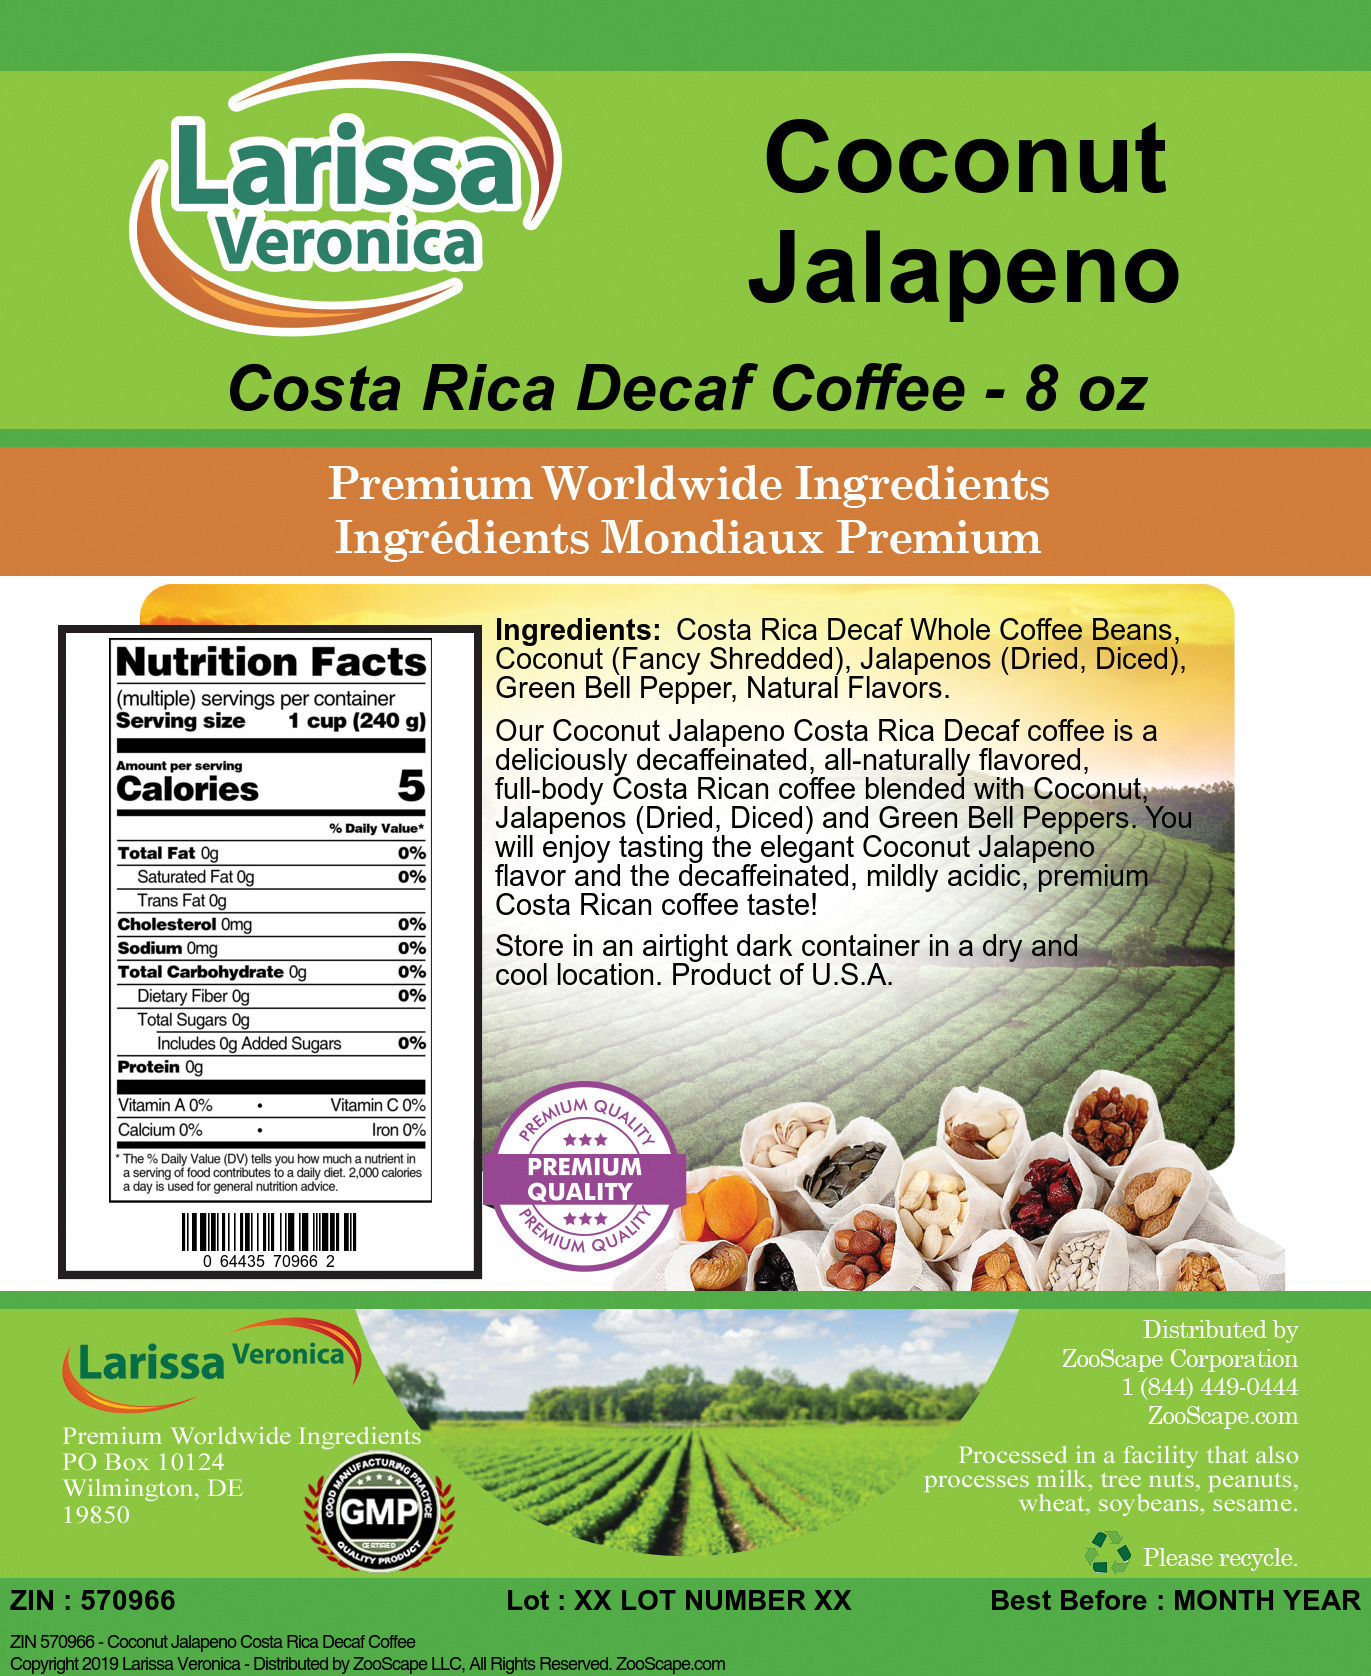 Coconut Jalapeno Costa Rica Decaf Coffee - Label